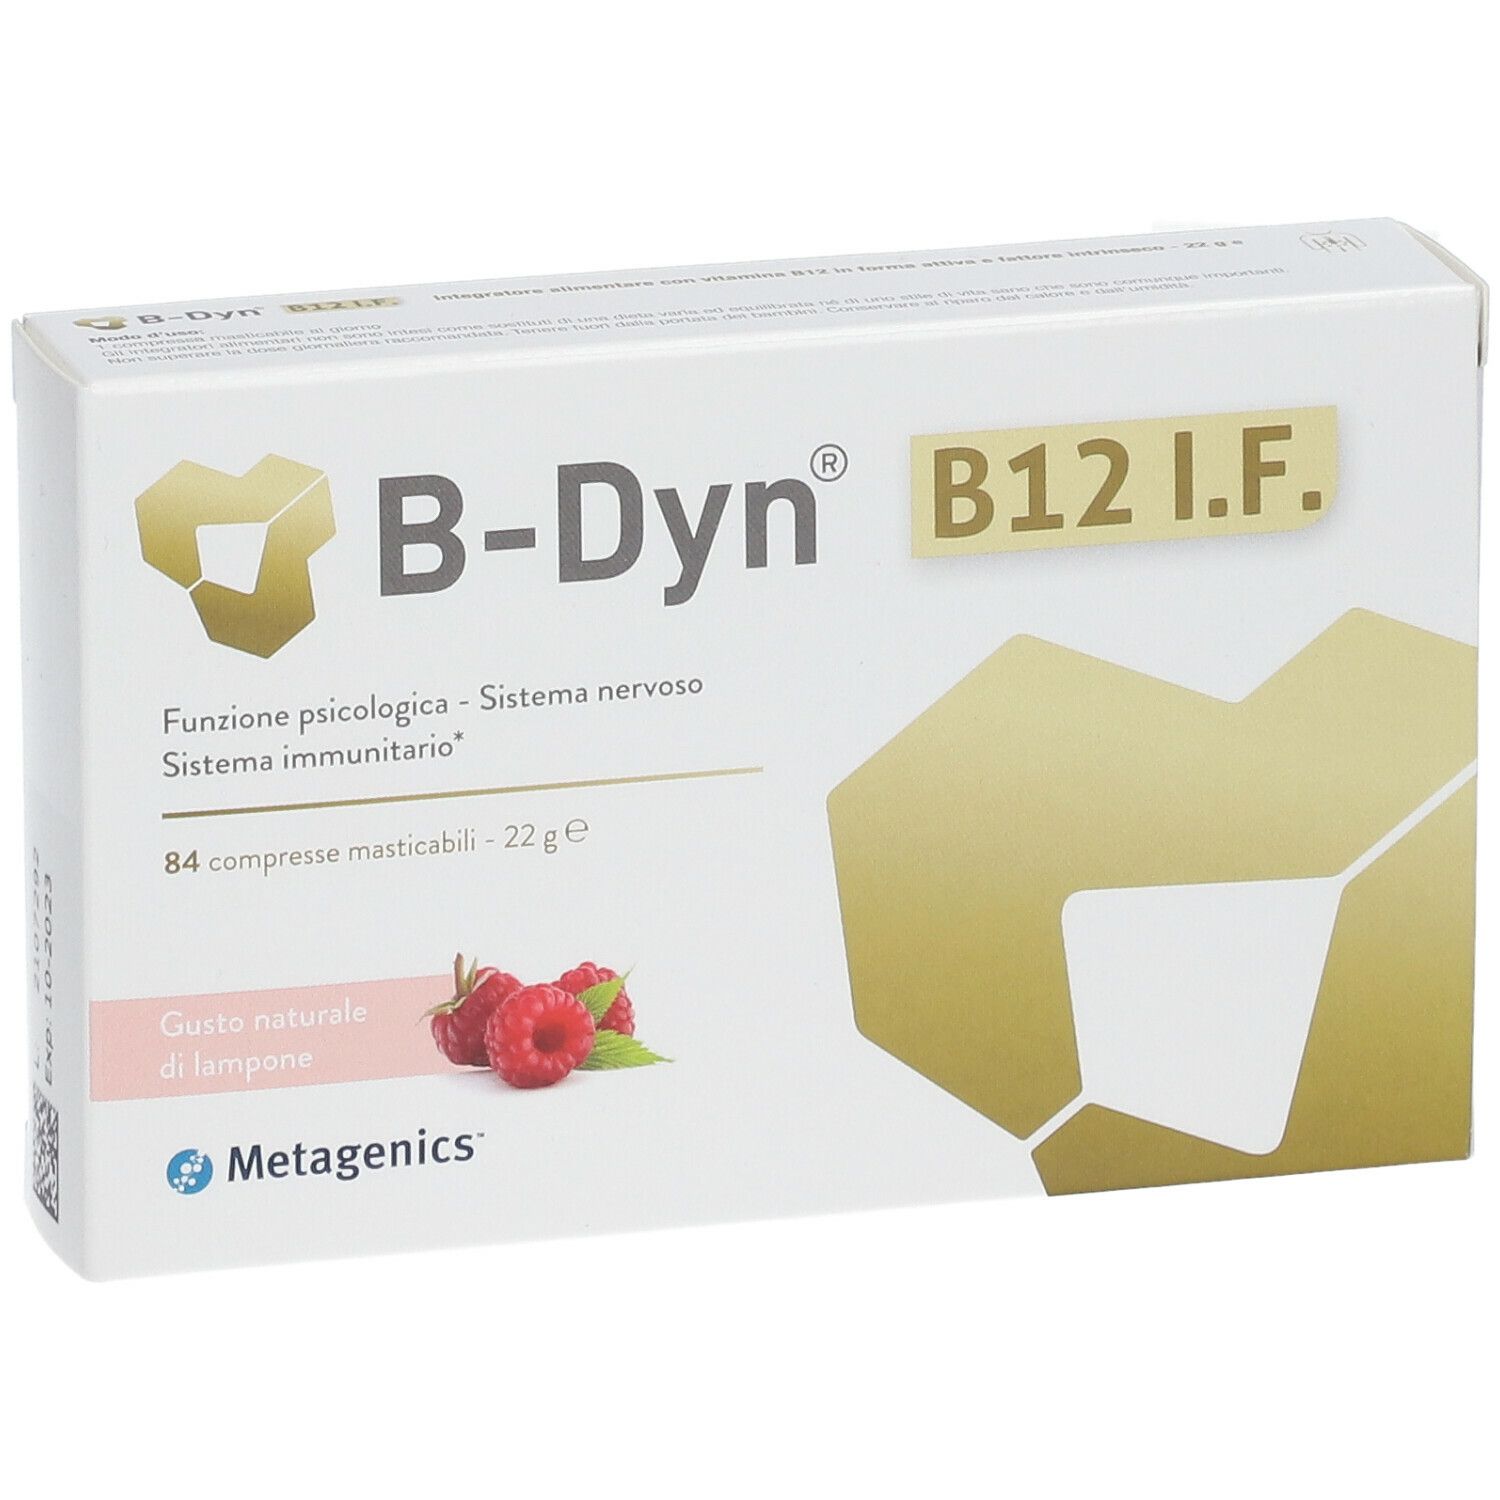 Metagenics™ B-Dyn® B12 I.F. Compresse masticabili